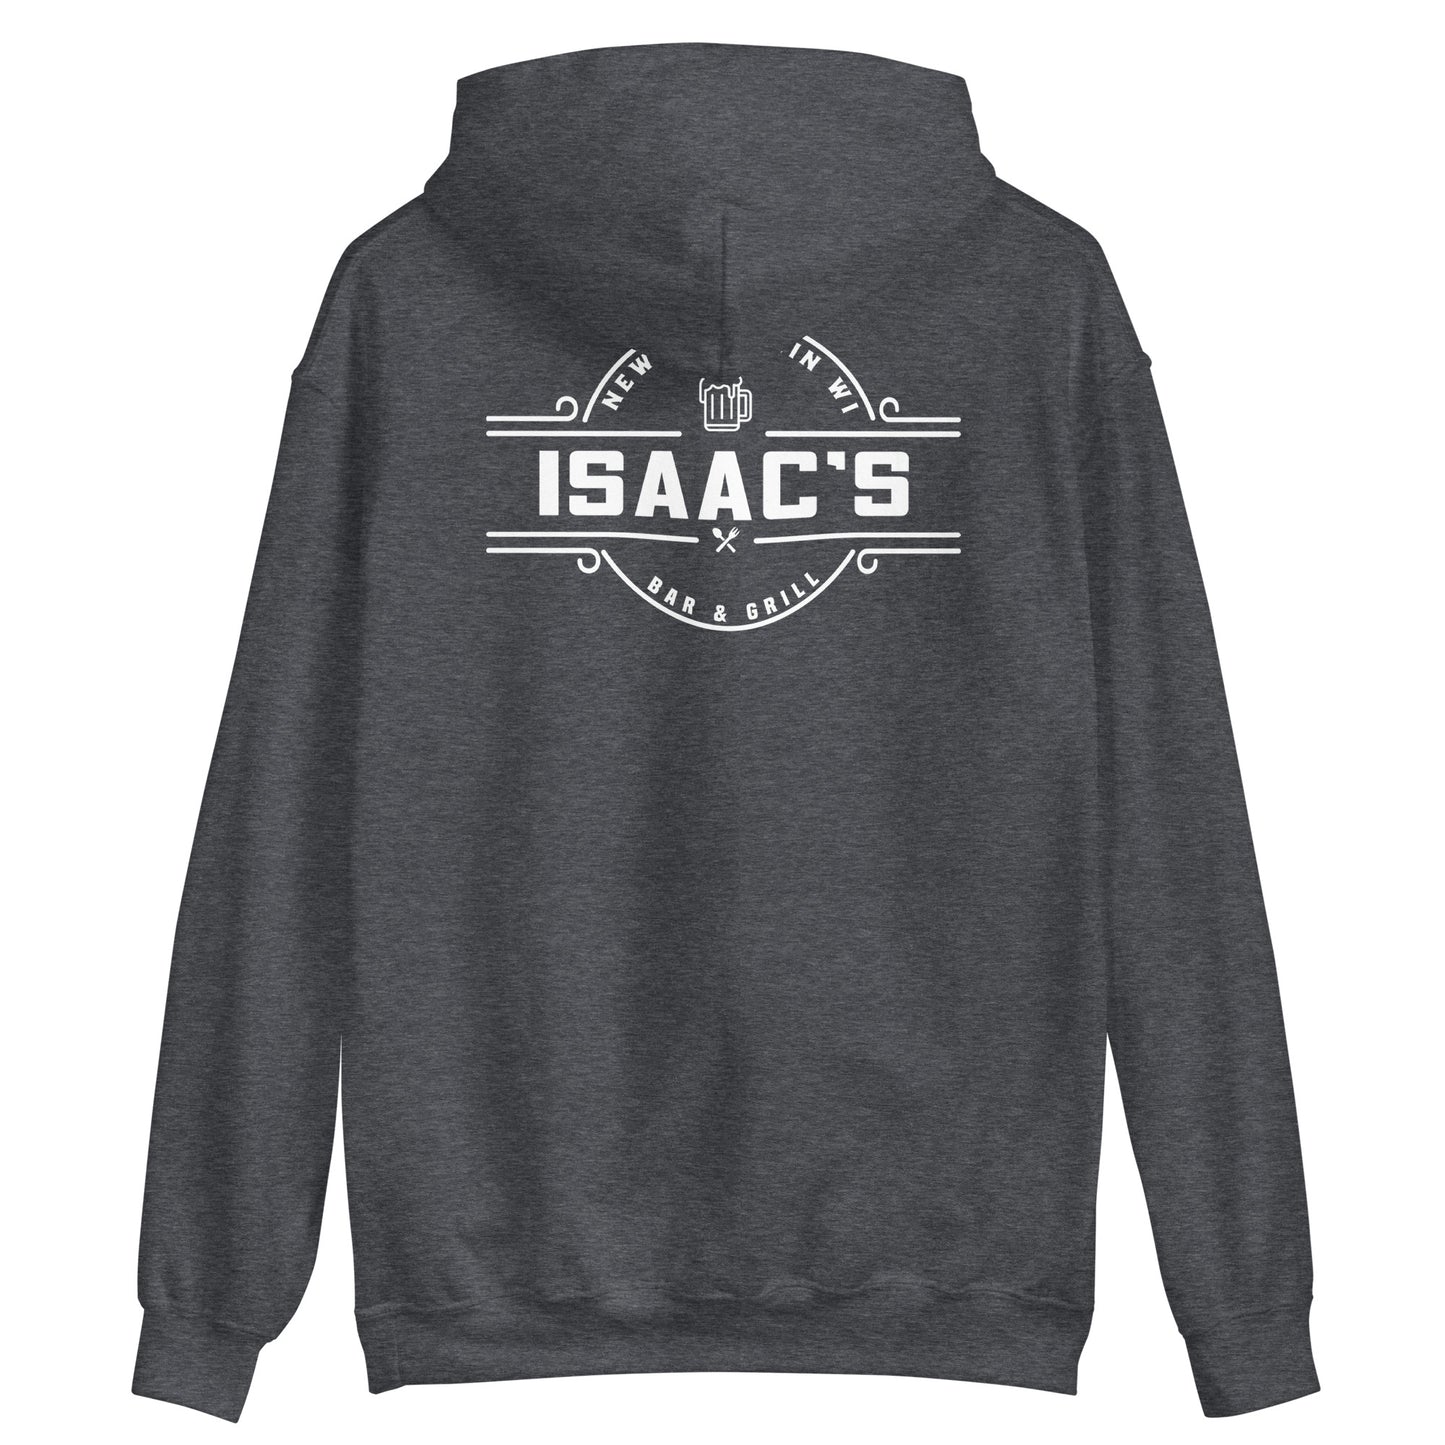 Isaac's Retro Hoodie